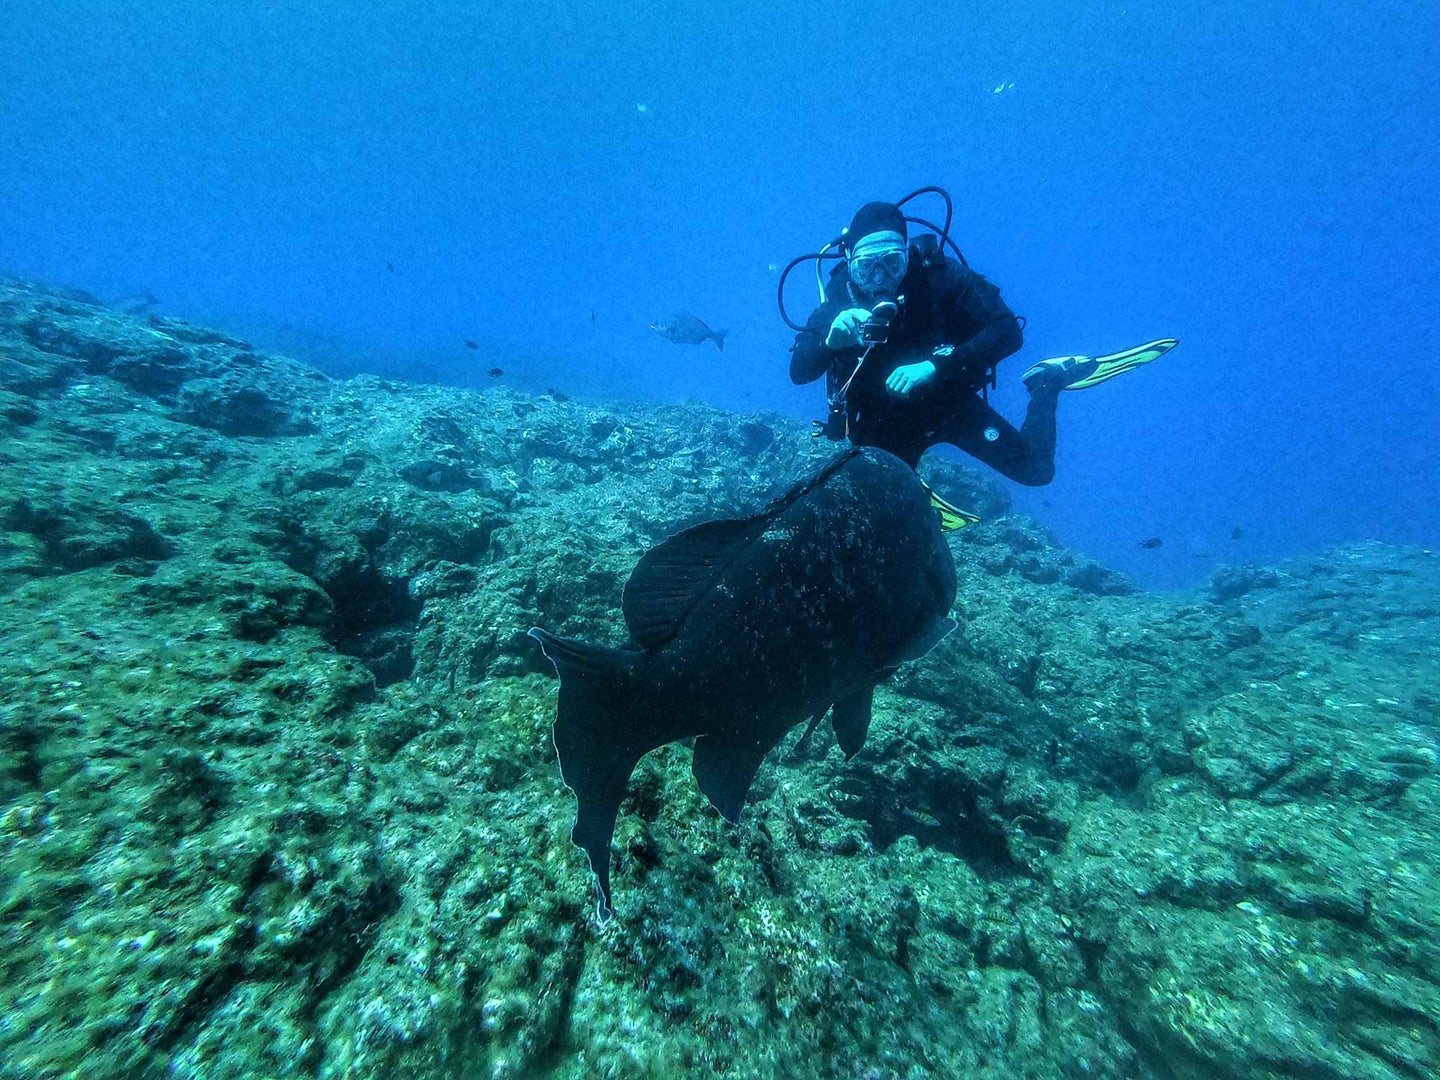 Scuba diver taking pictures underwater